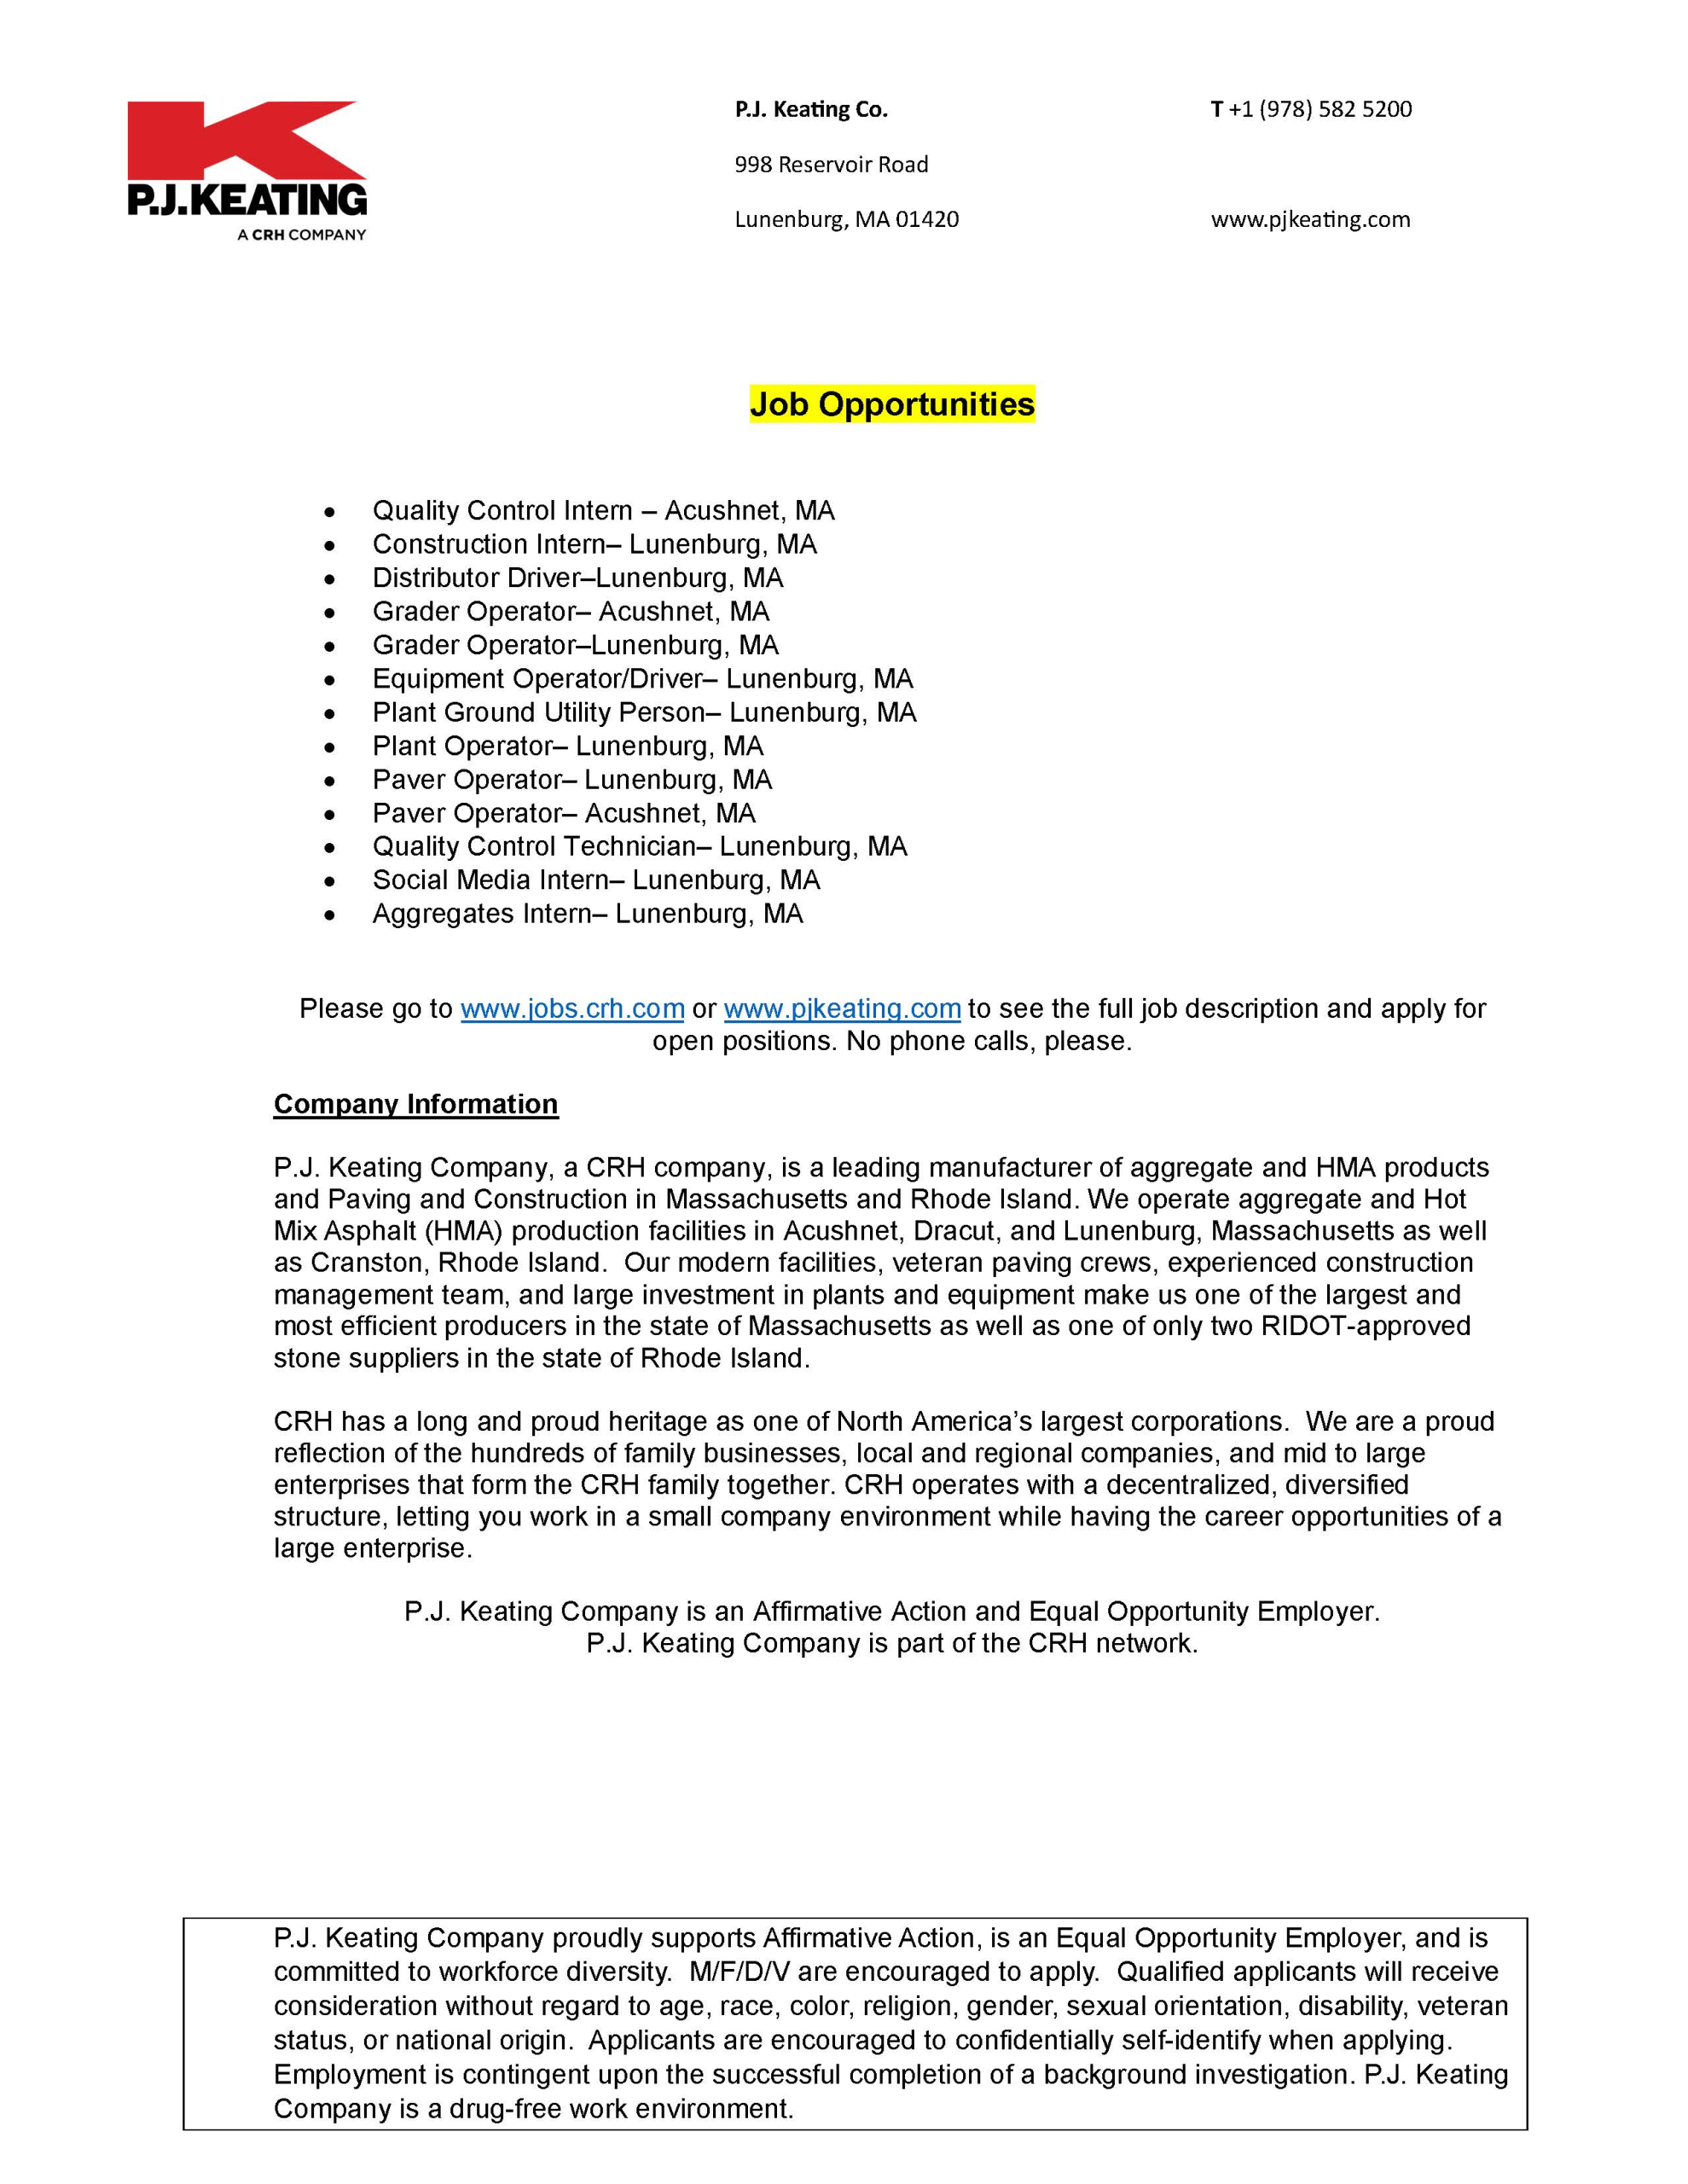 P.J. Keating Company Job Opportunities List